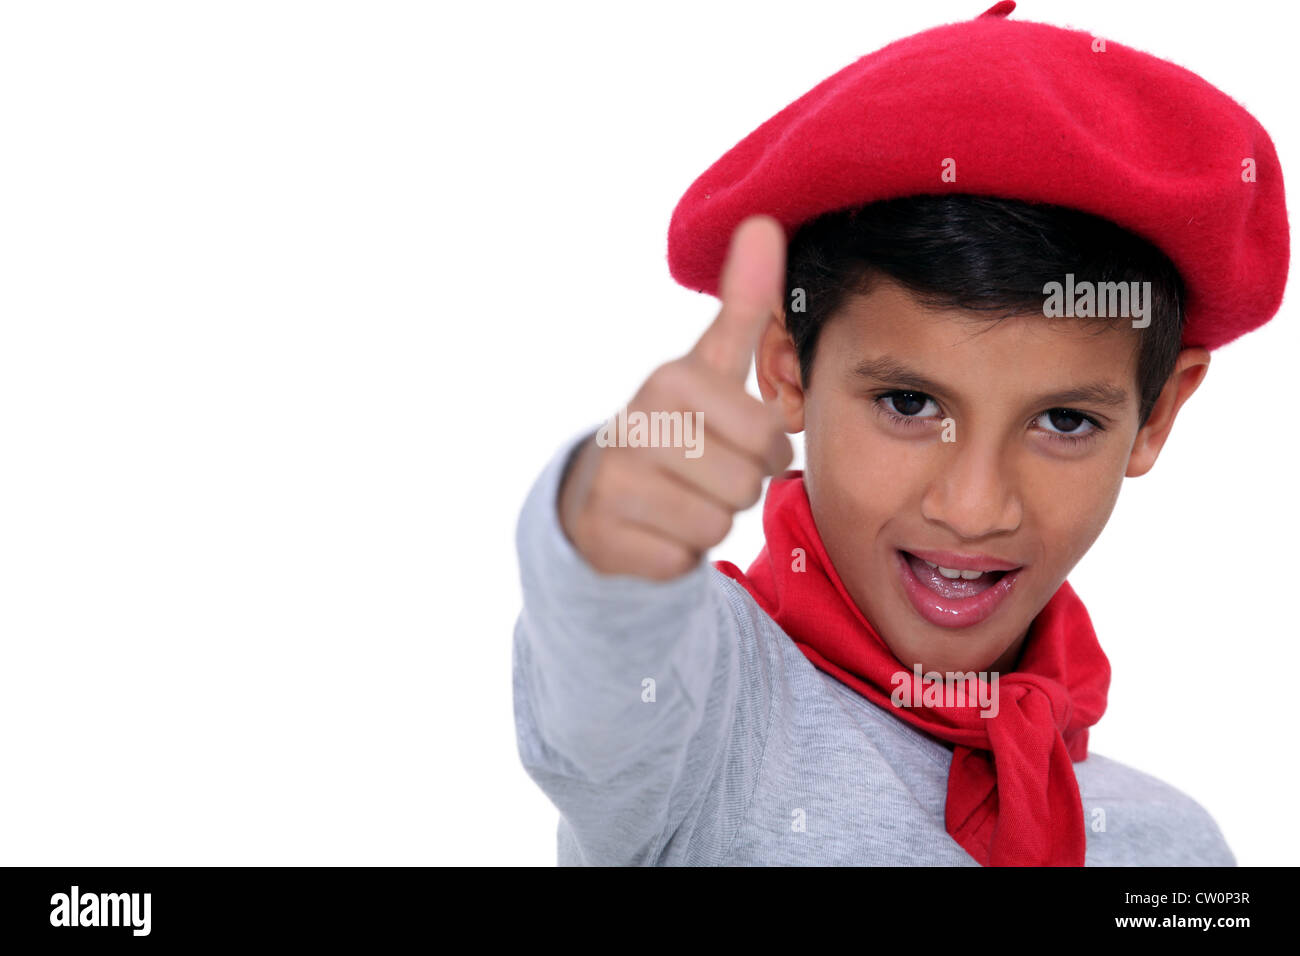 Niño con boina roja Fotografía de stock Alamy